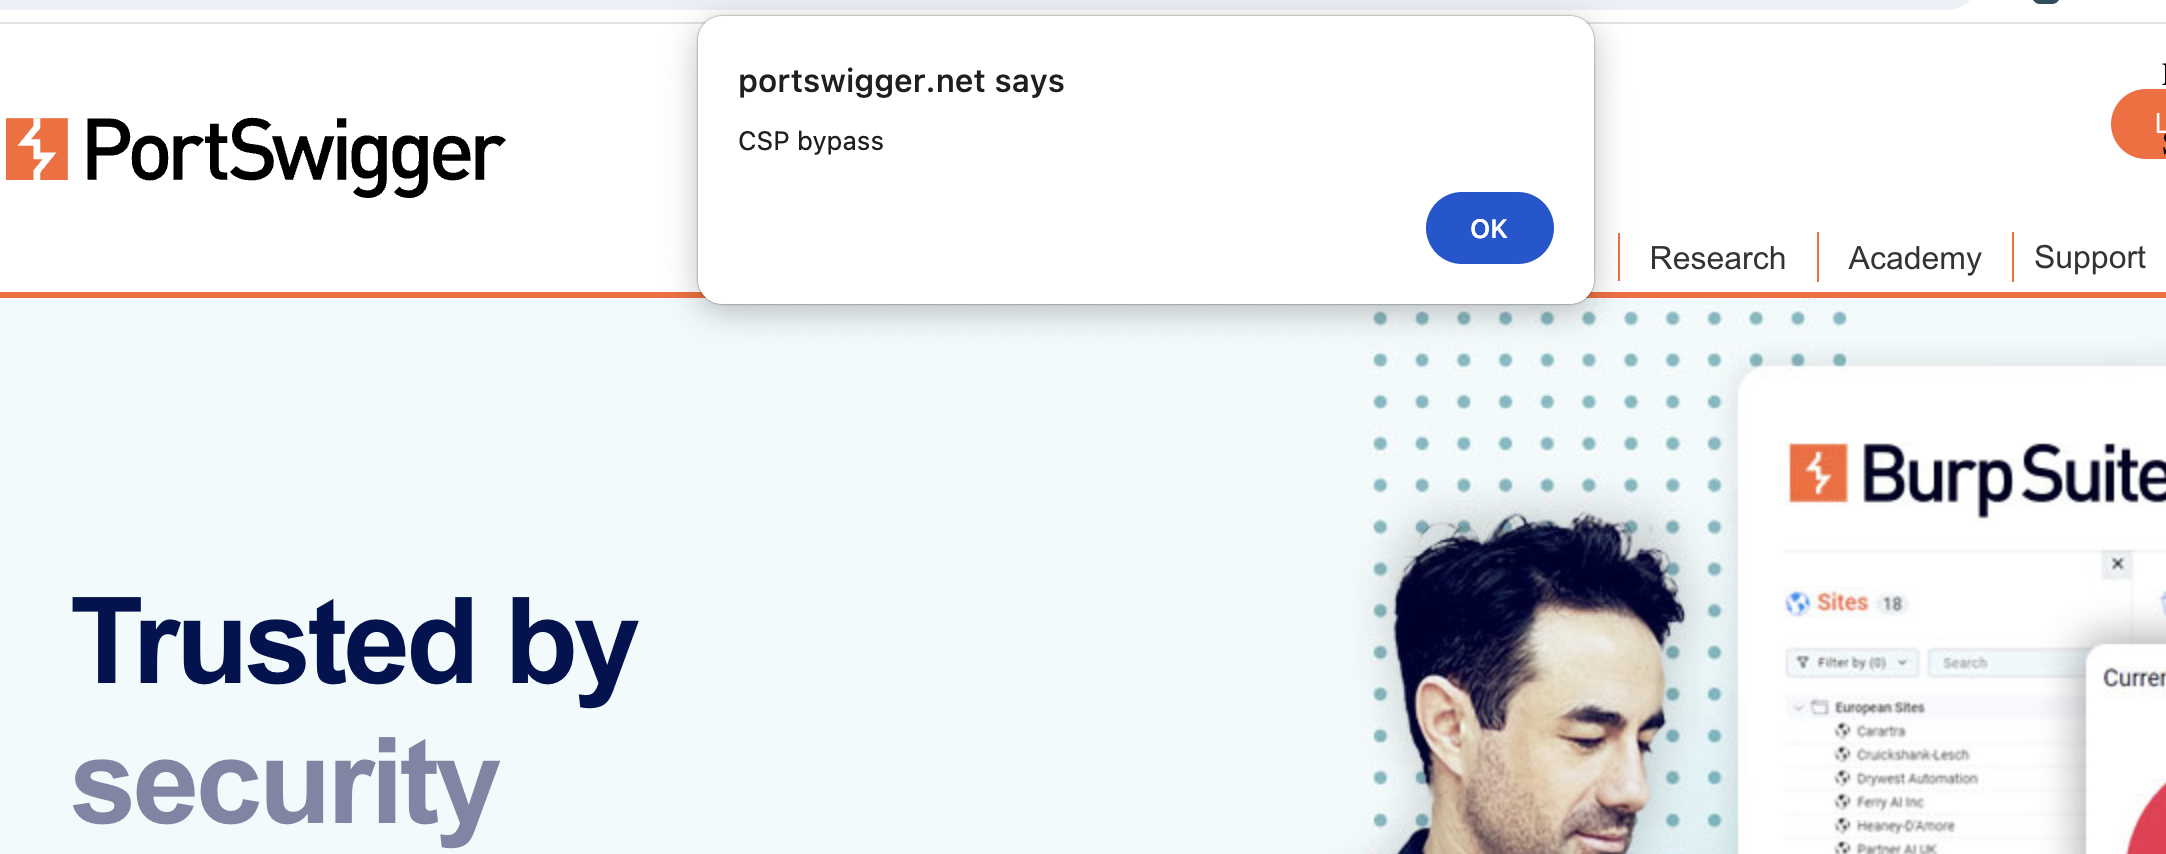 CSP bypass on PortSwigger.net using Google script resources